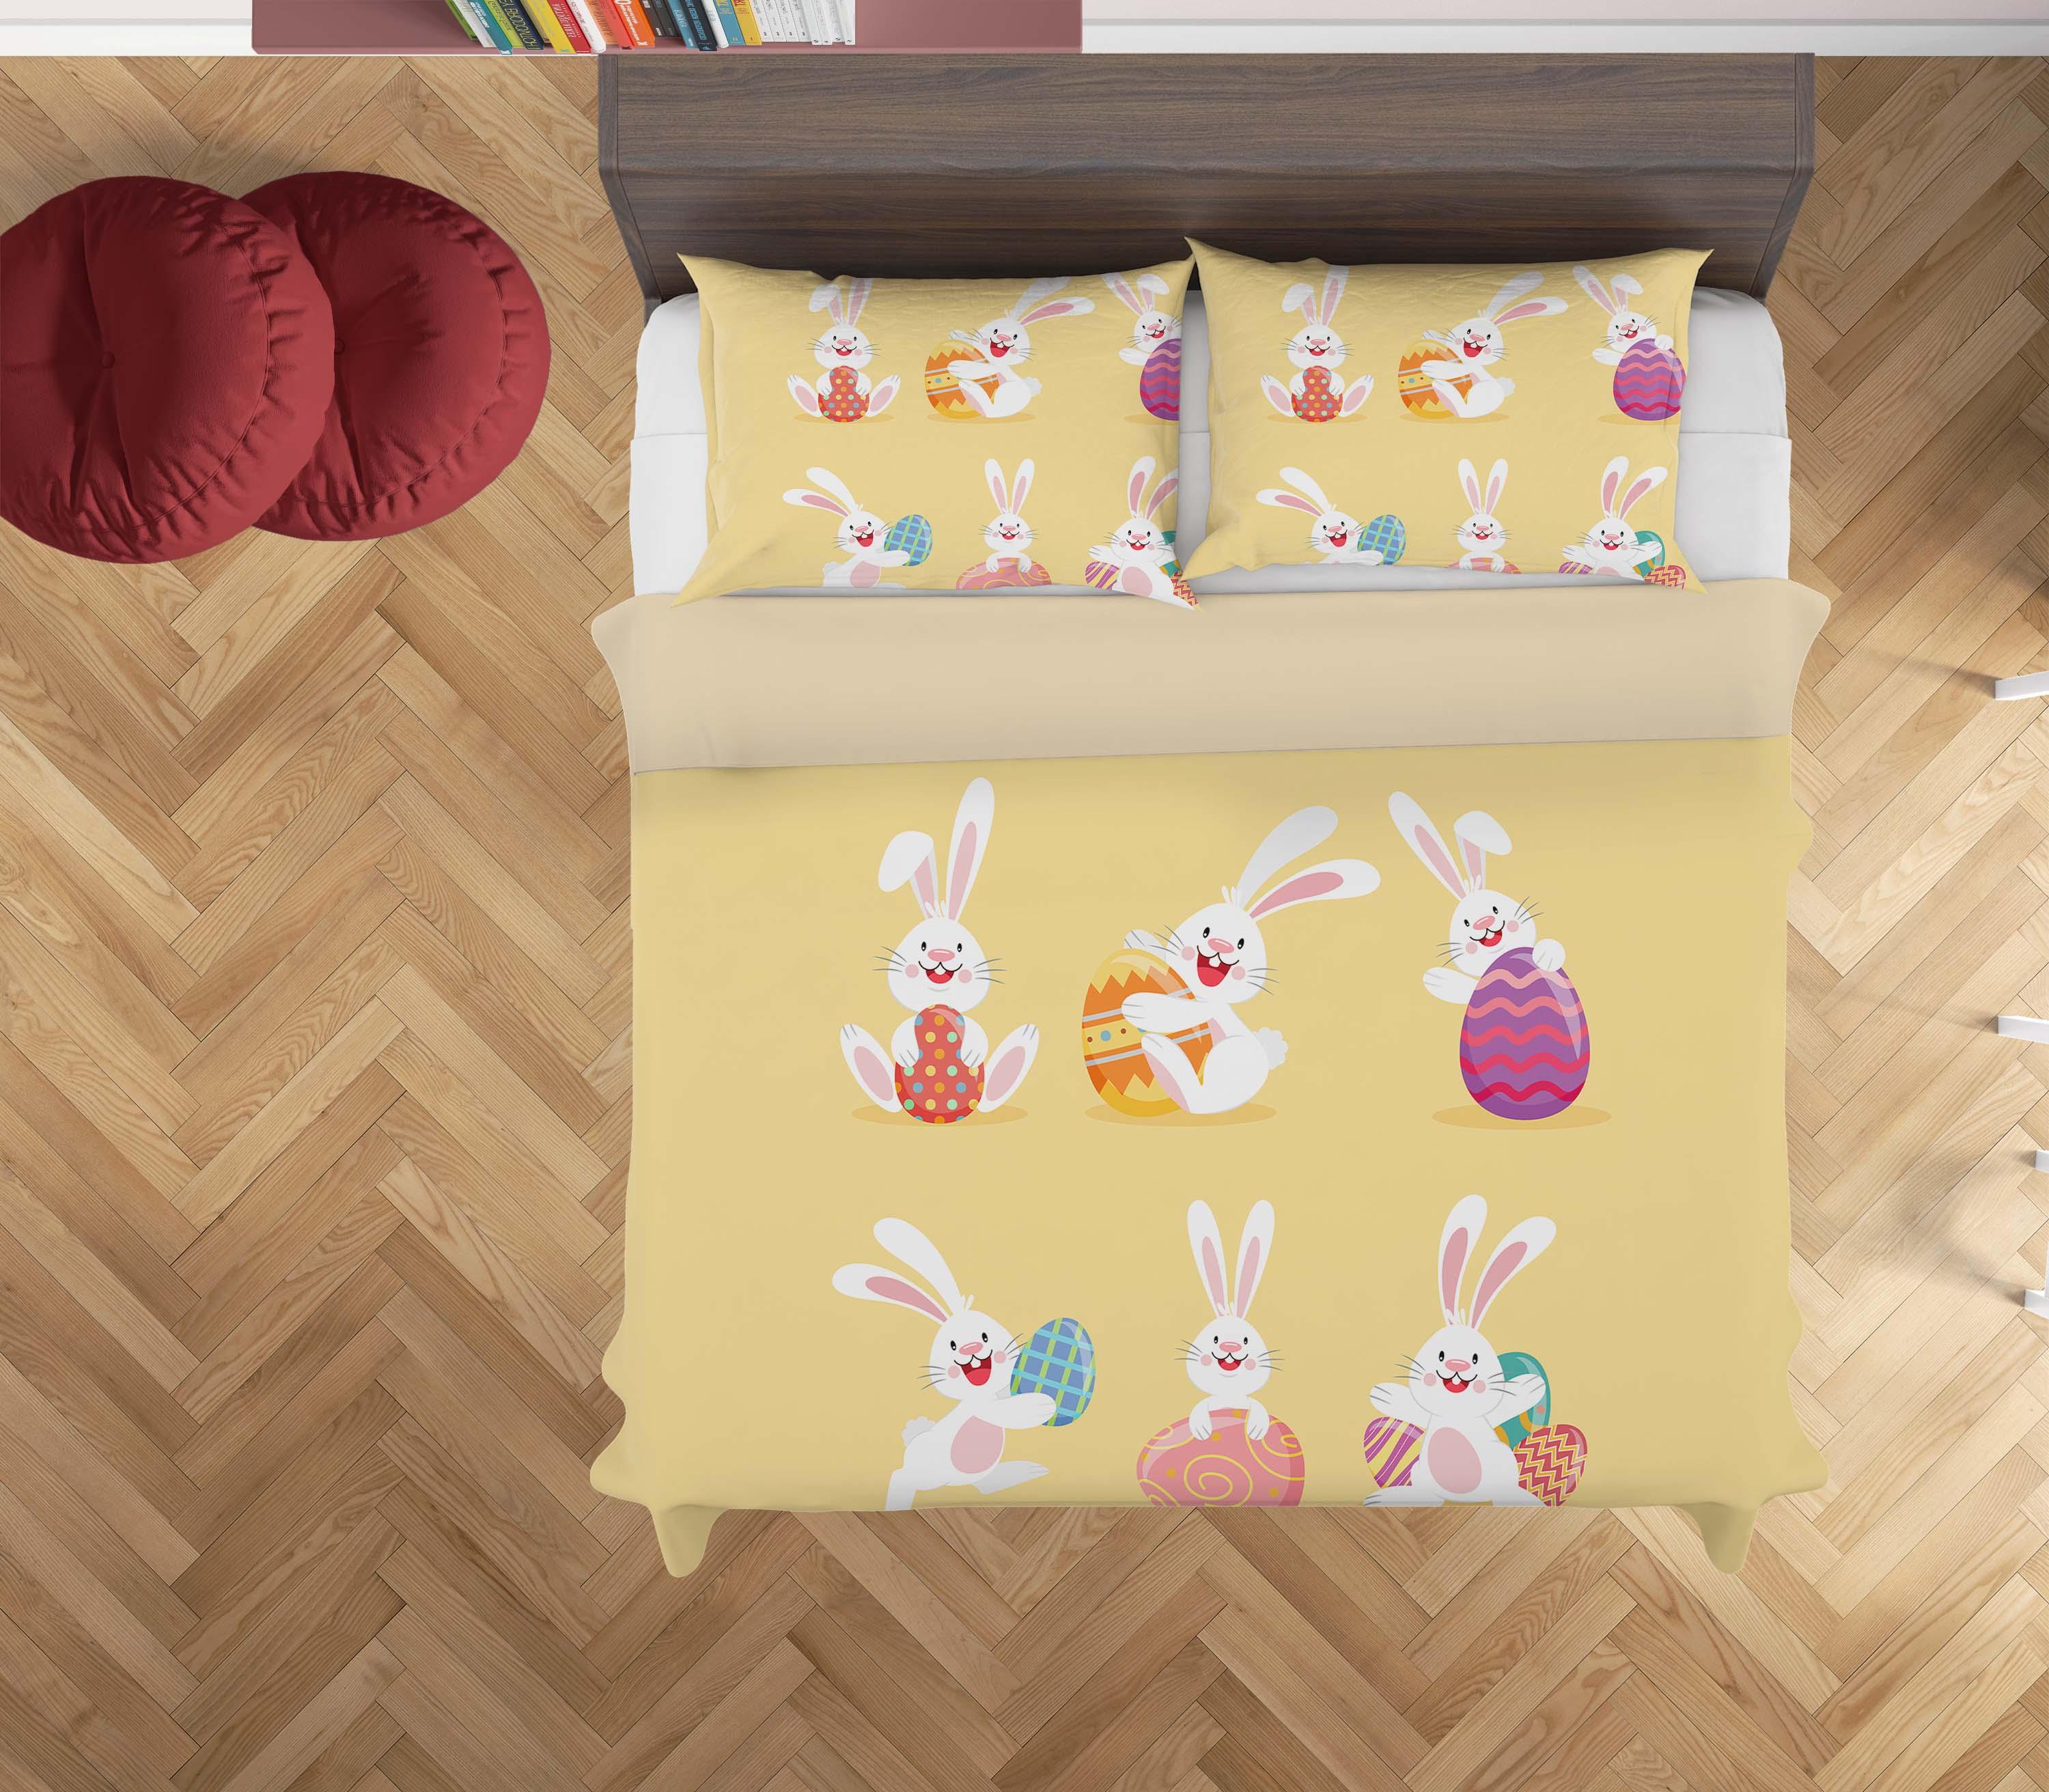 3D Yellow Rabbit Eggs Quilt Cover Set Bedding Set Duvet Cover Pillowcases SF84- Jess Art Decoration